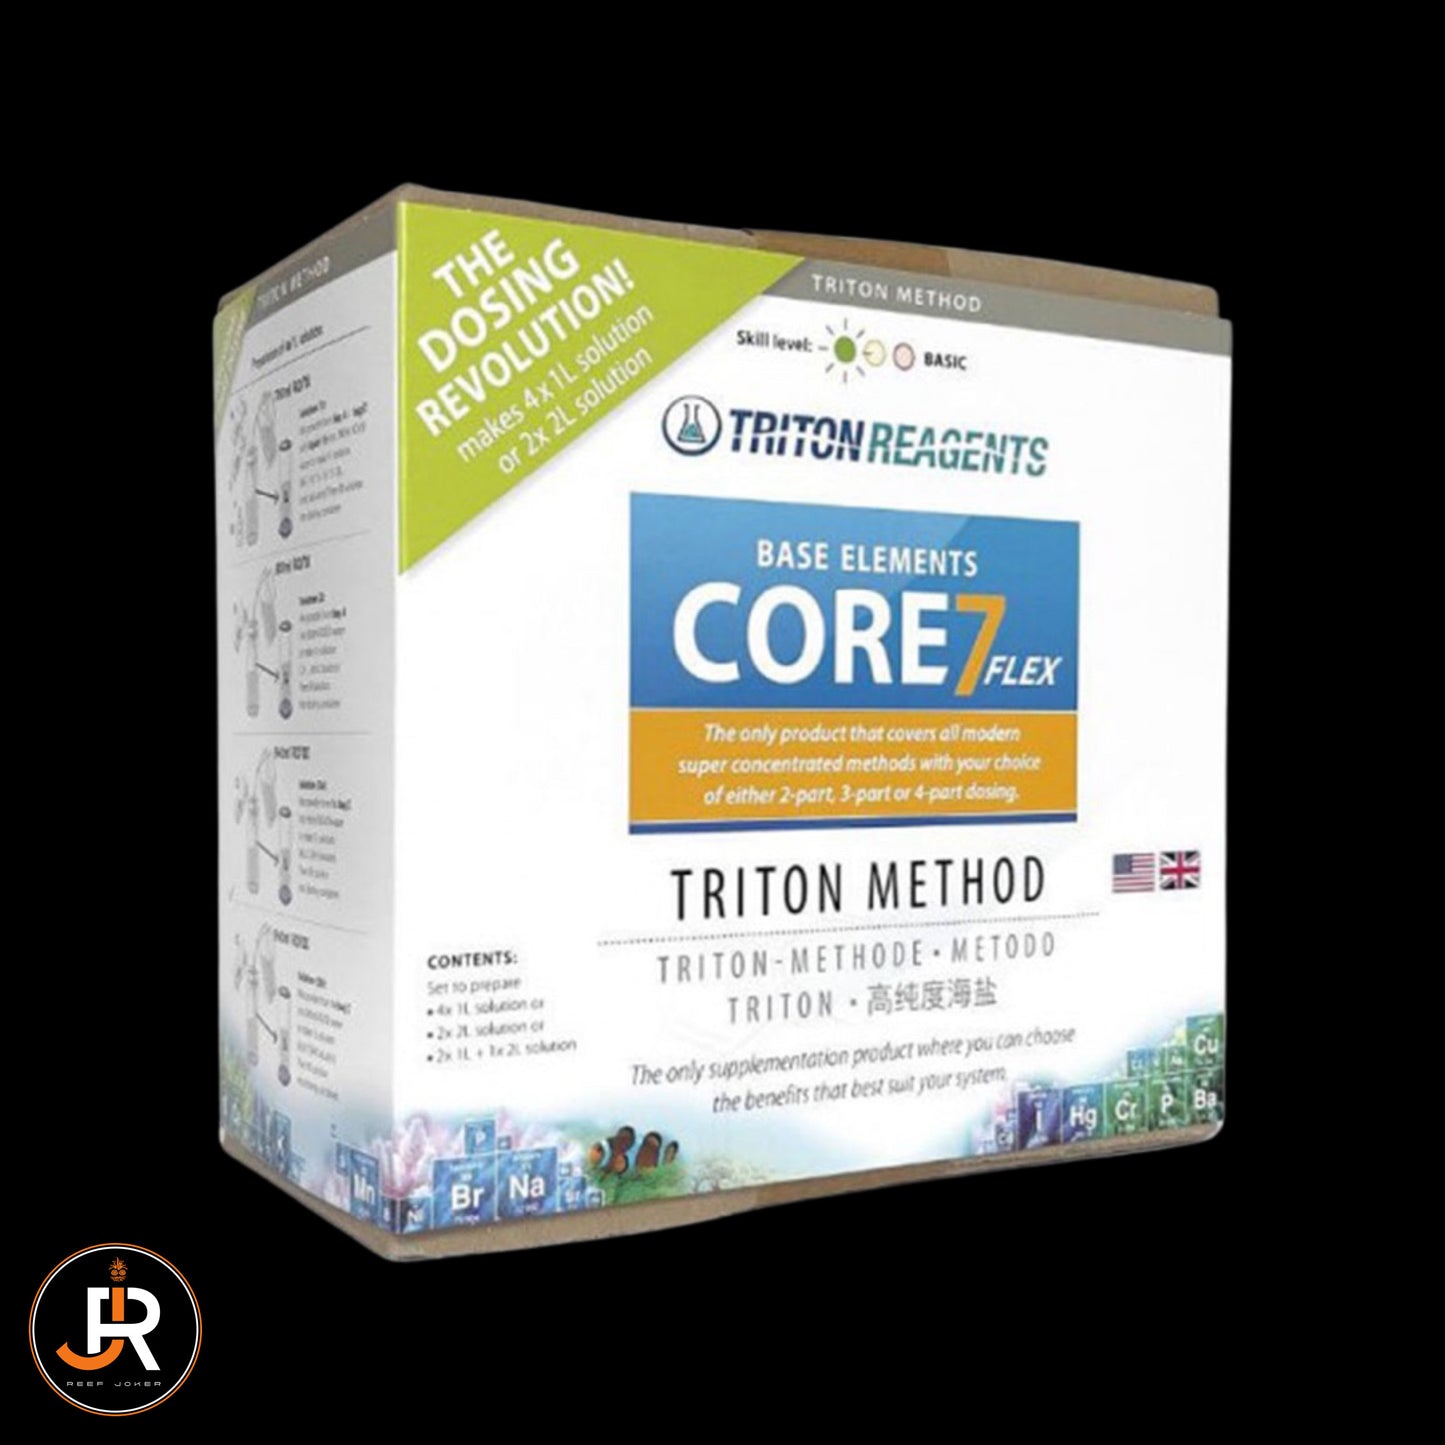 Triton Method CORE7 flex 4x1